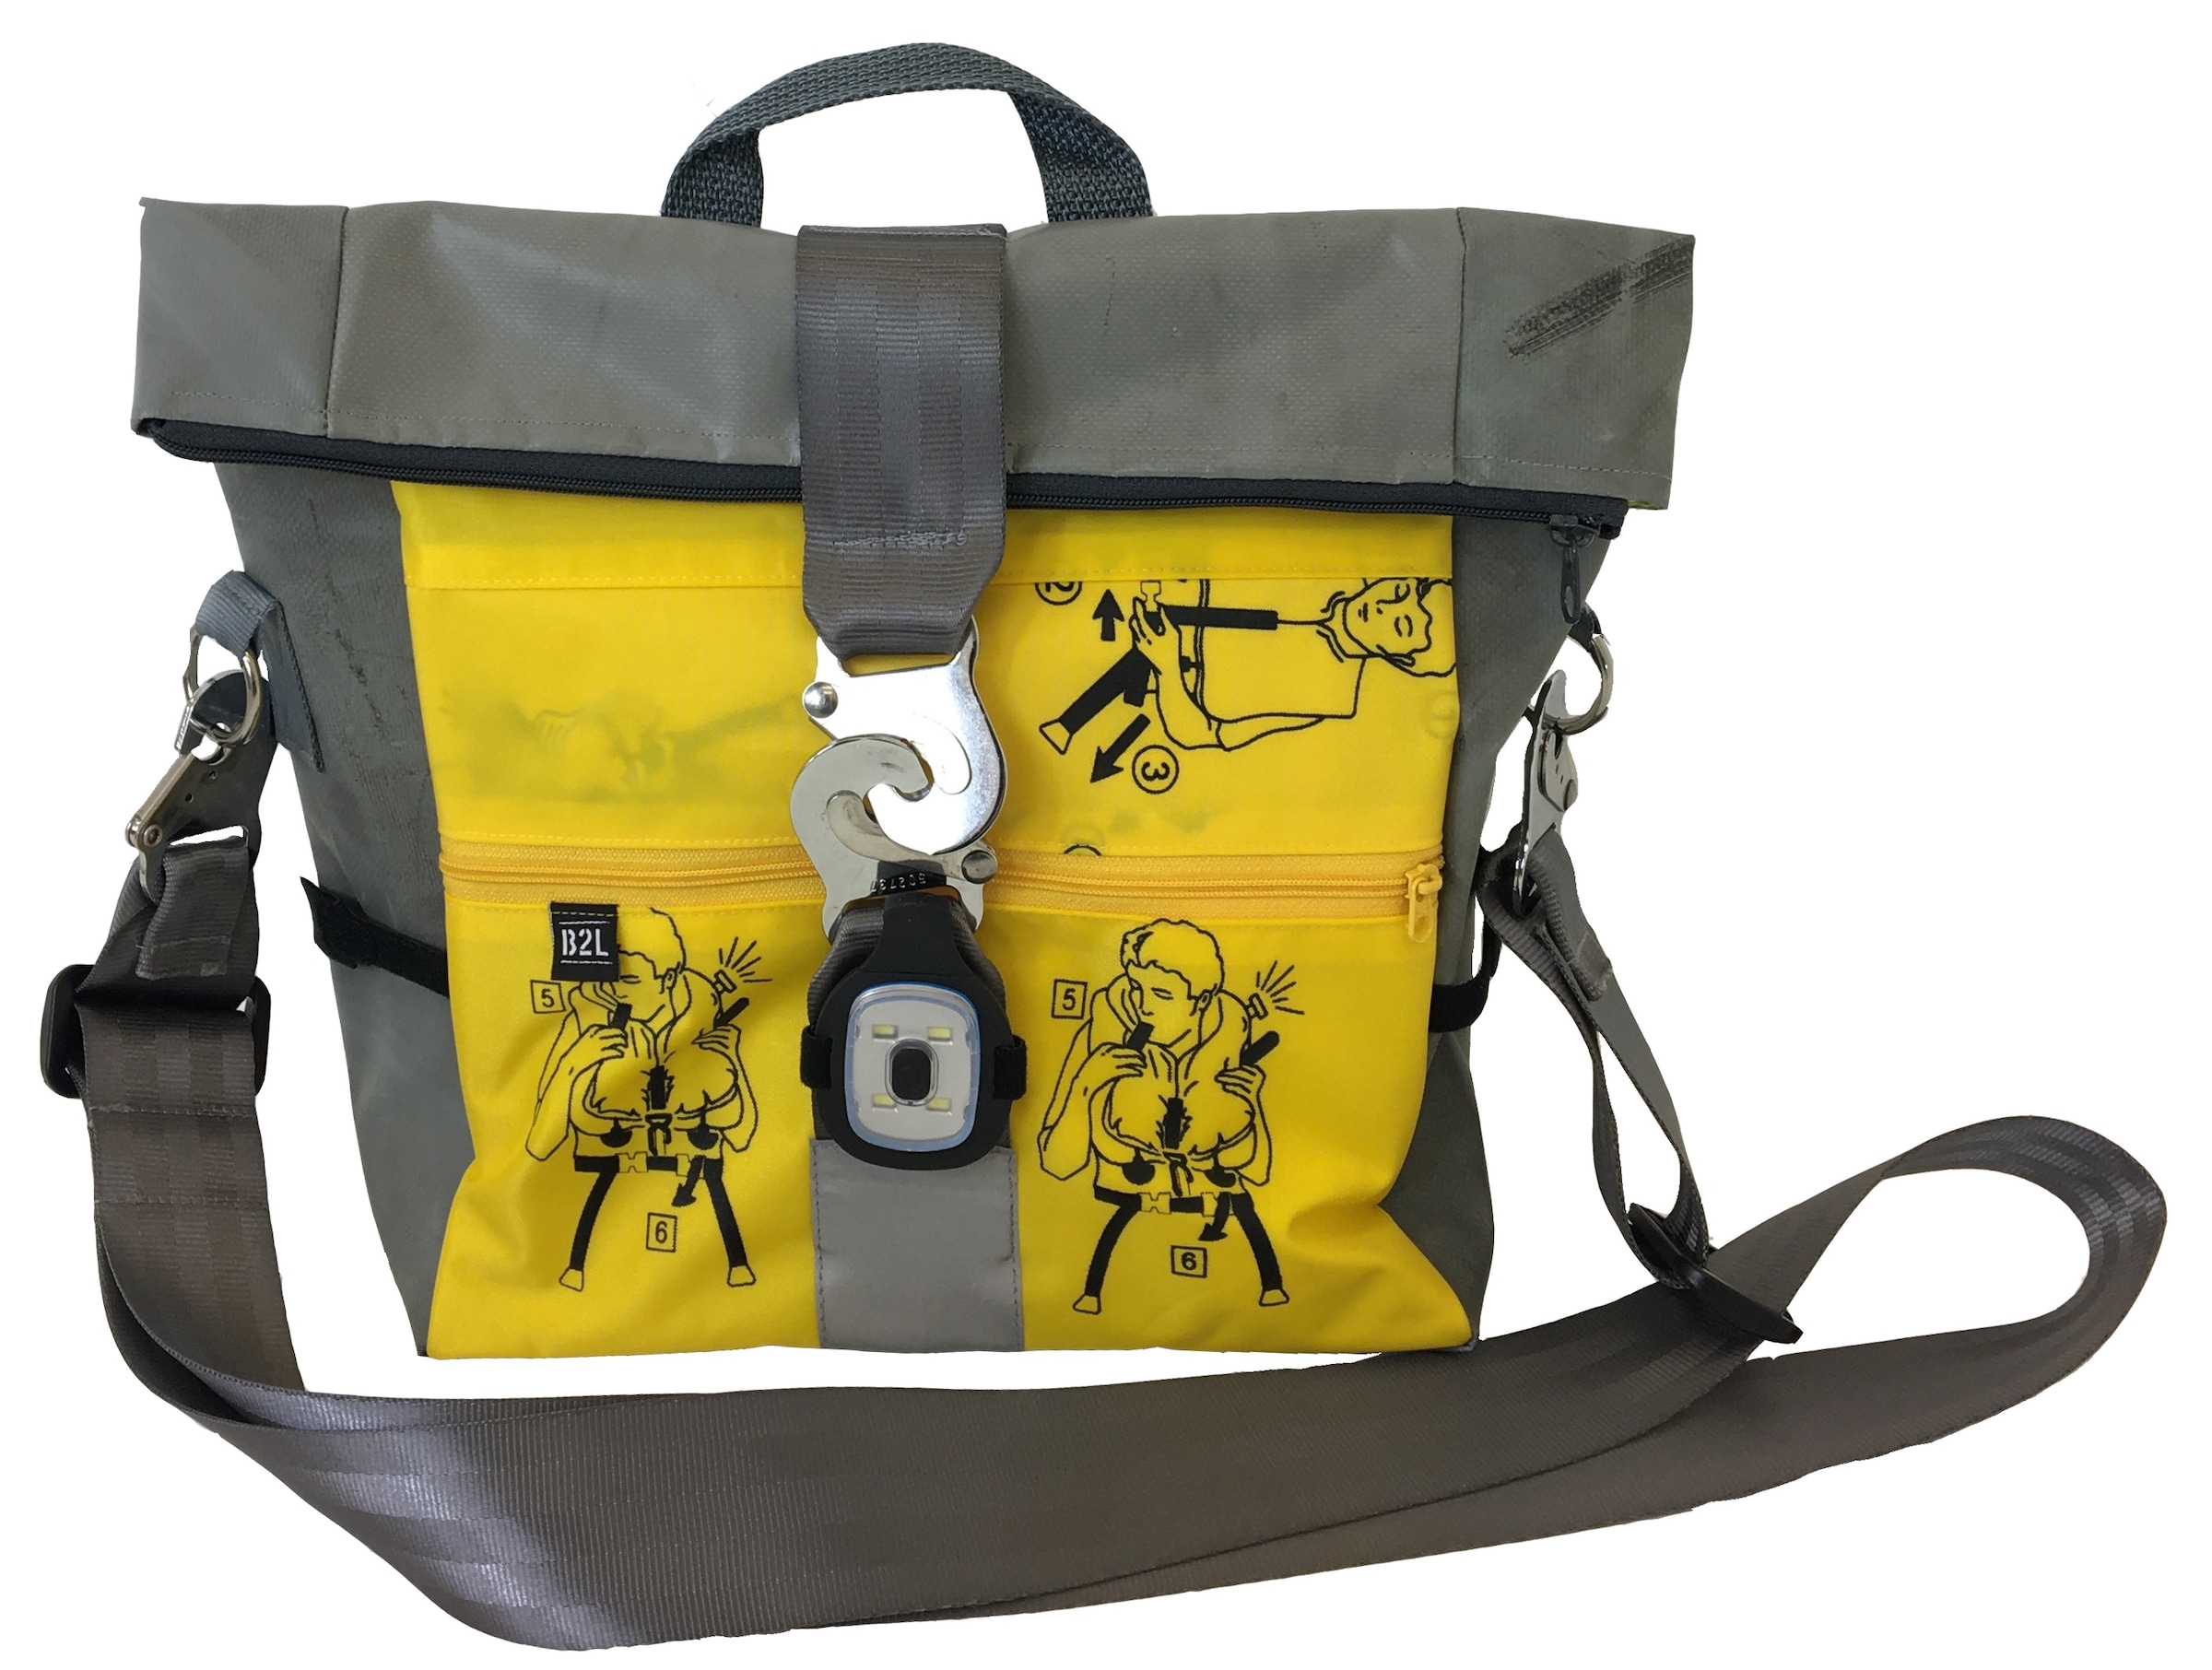 Bag to Life Online-Shop ▷ Accessoires & Taschen | BAUR